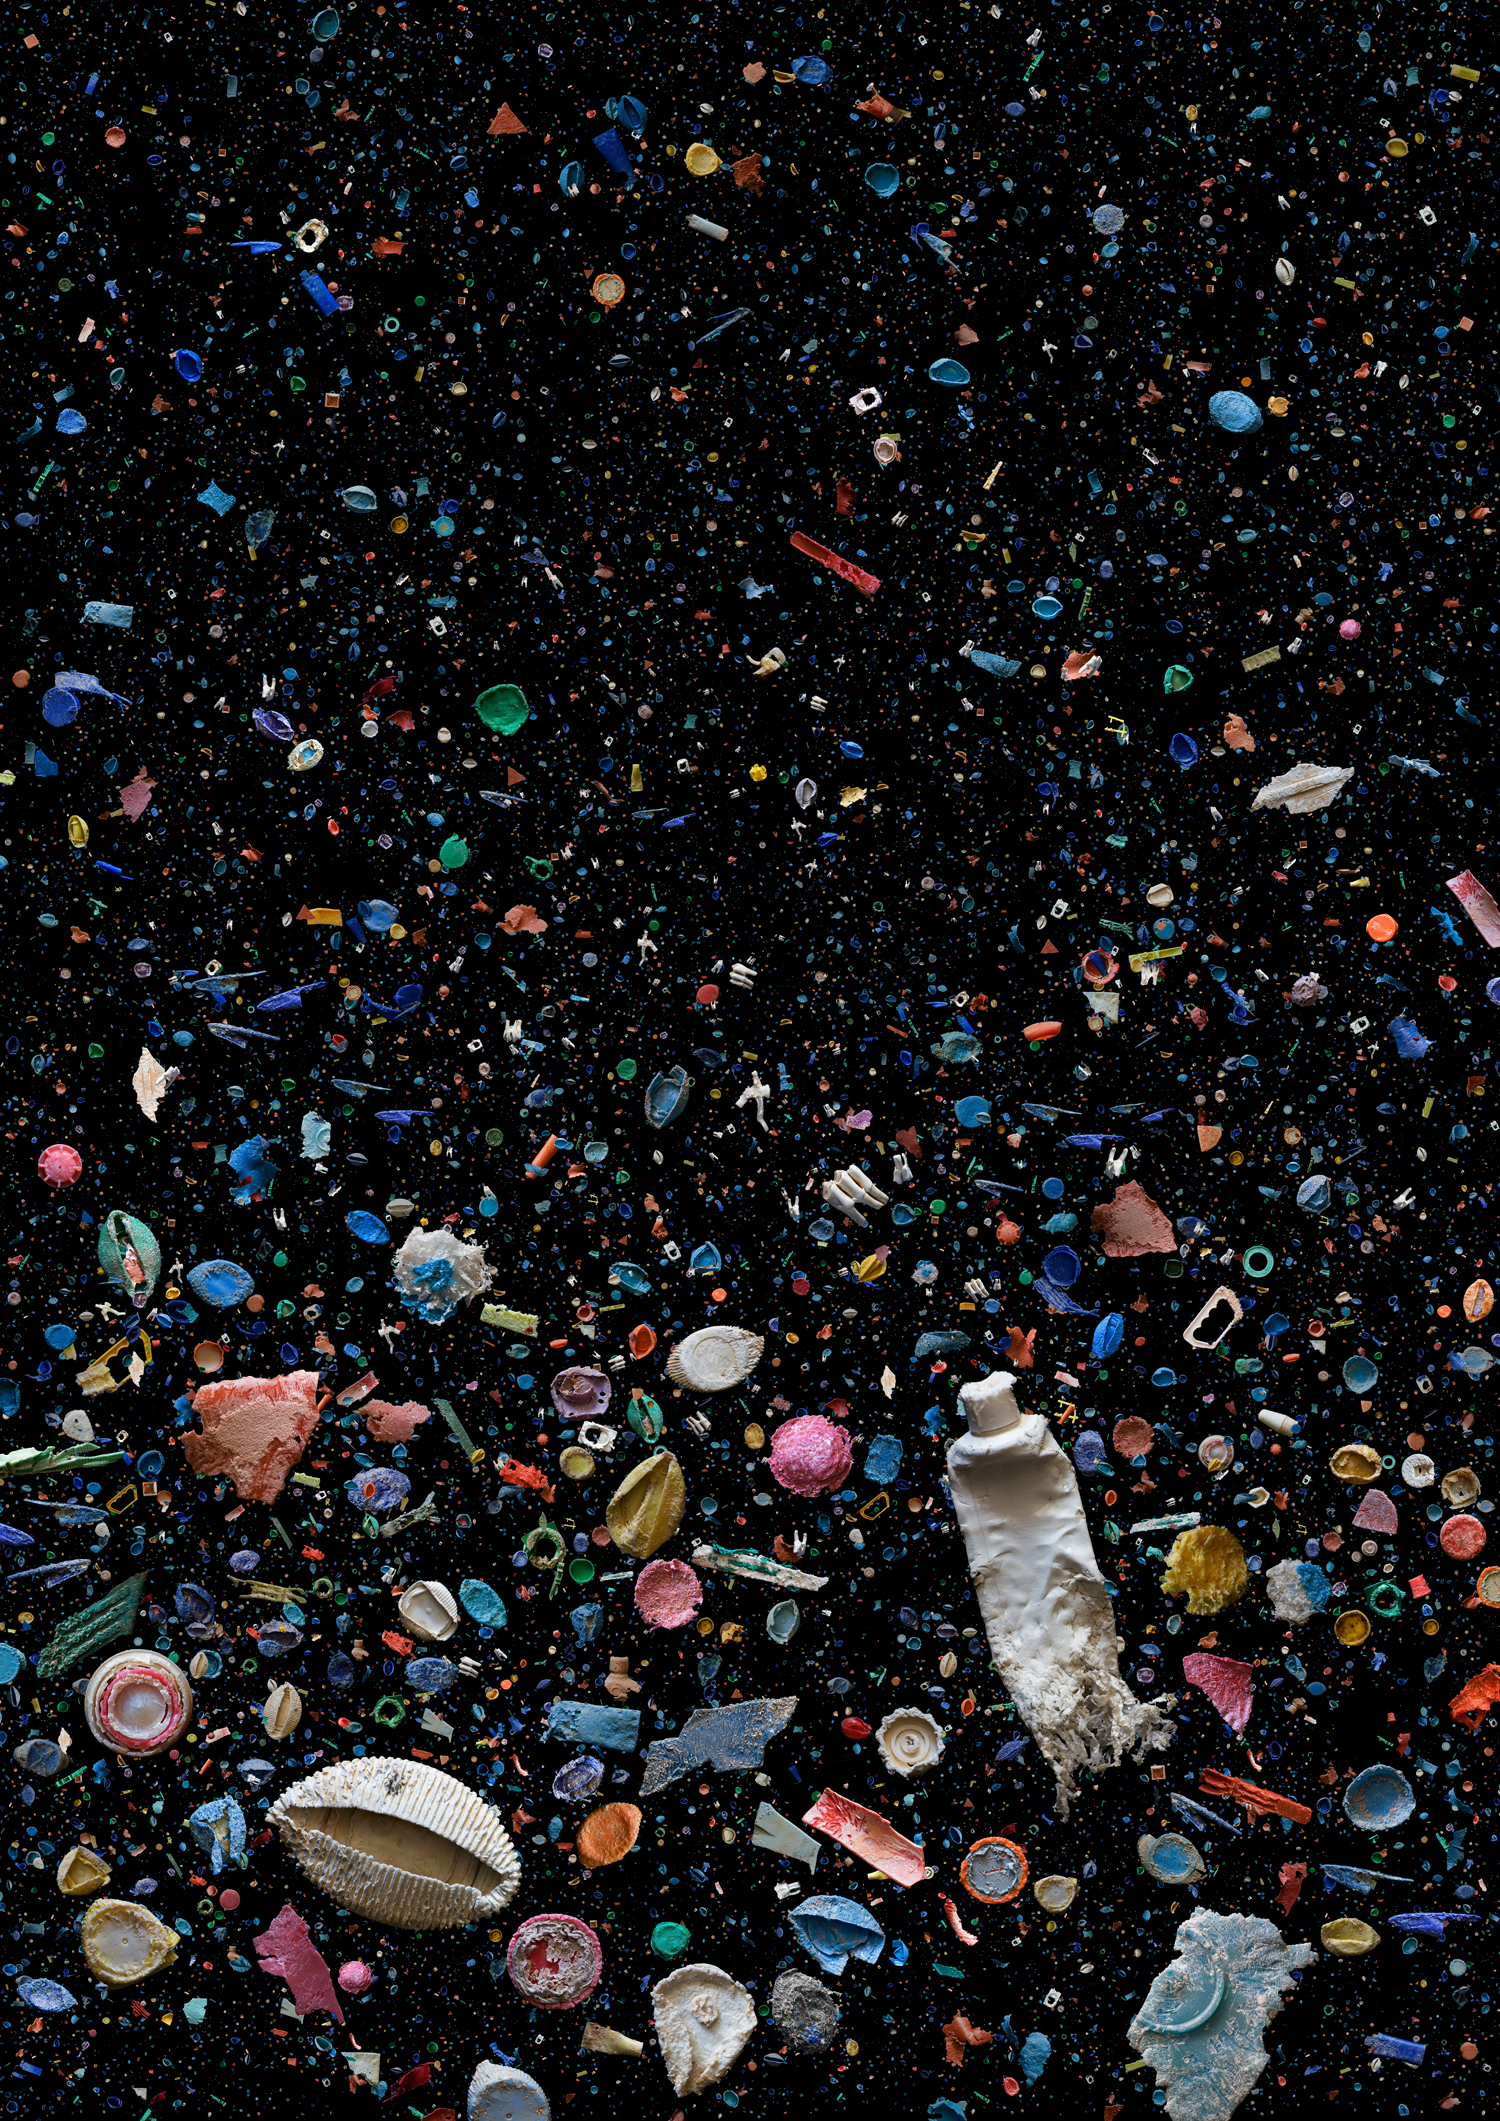 Artful Swirls of Plastic Marine Debris Documented in Image by Photographer Mandy Barker